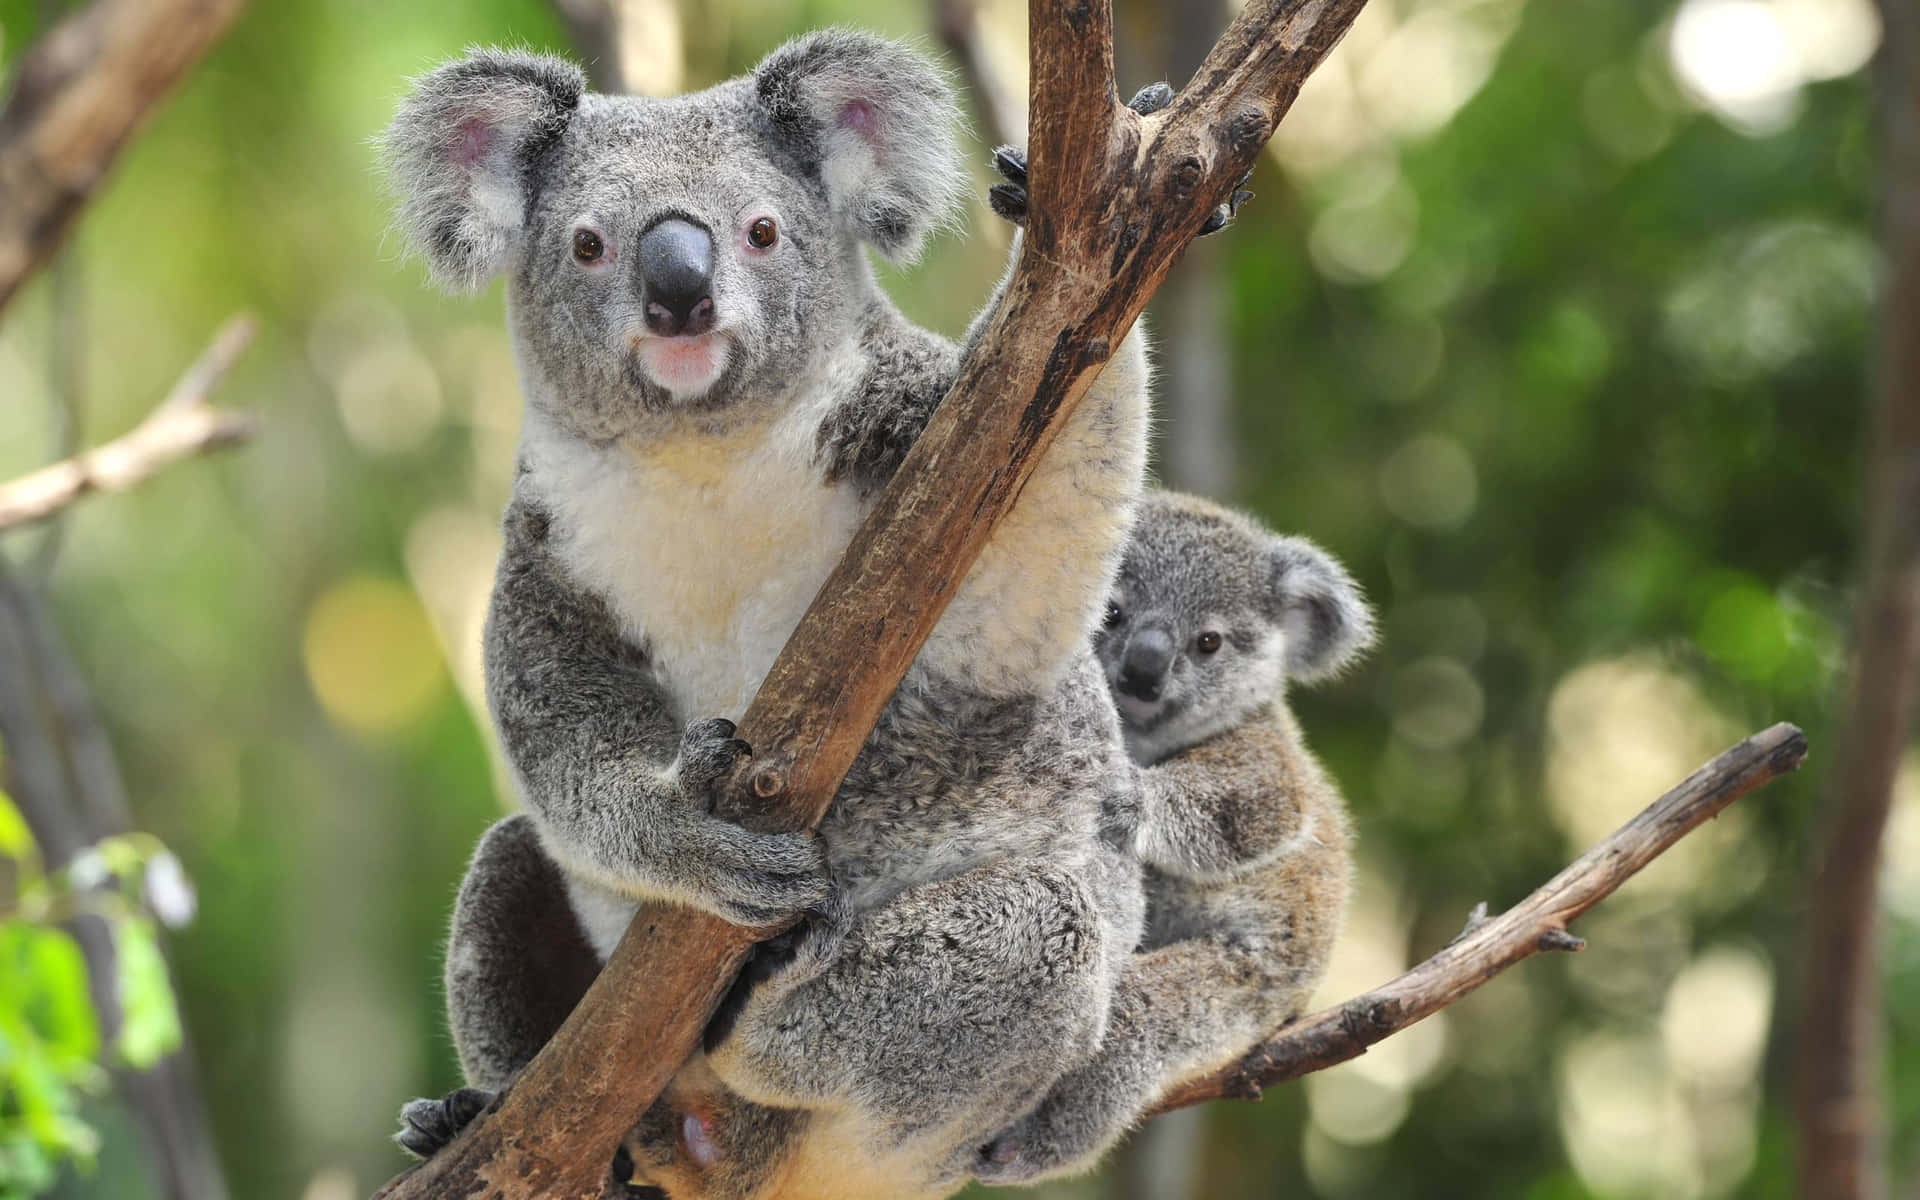 Cute Koala Hanging On The Tree